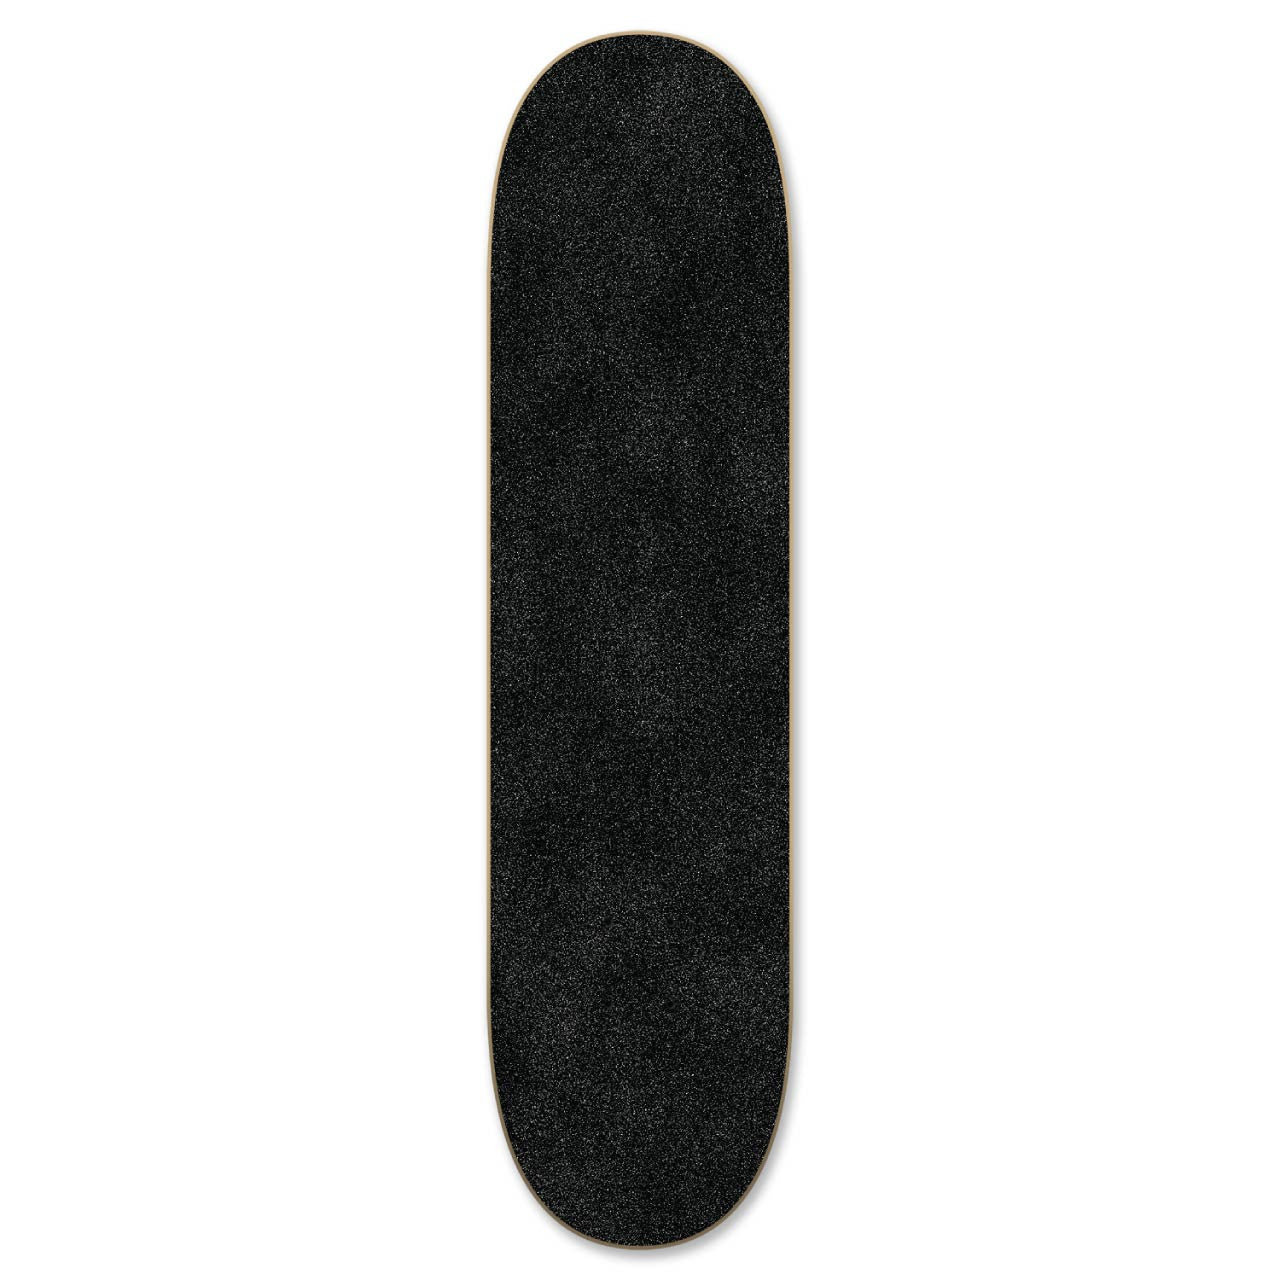 Graphic Hot Rod Slim Skateboard Deck